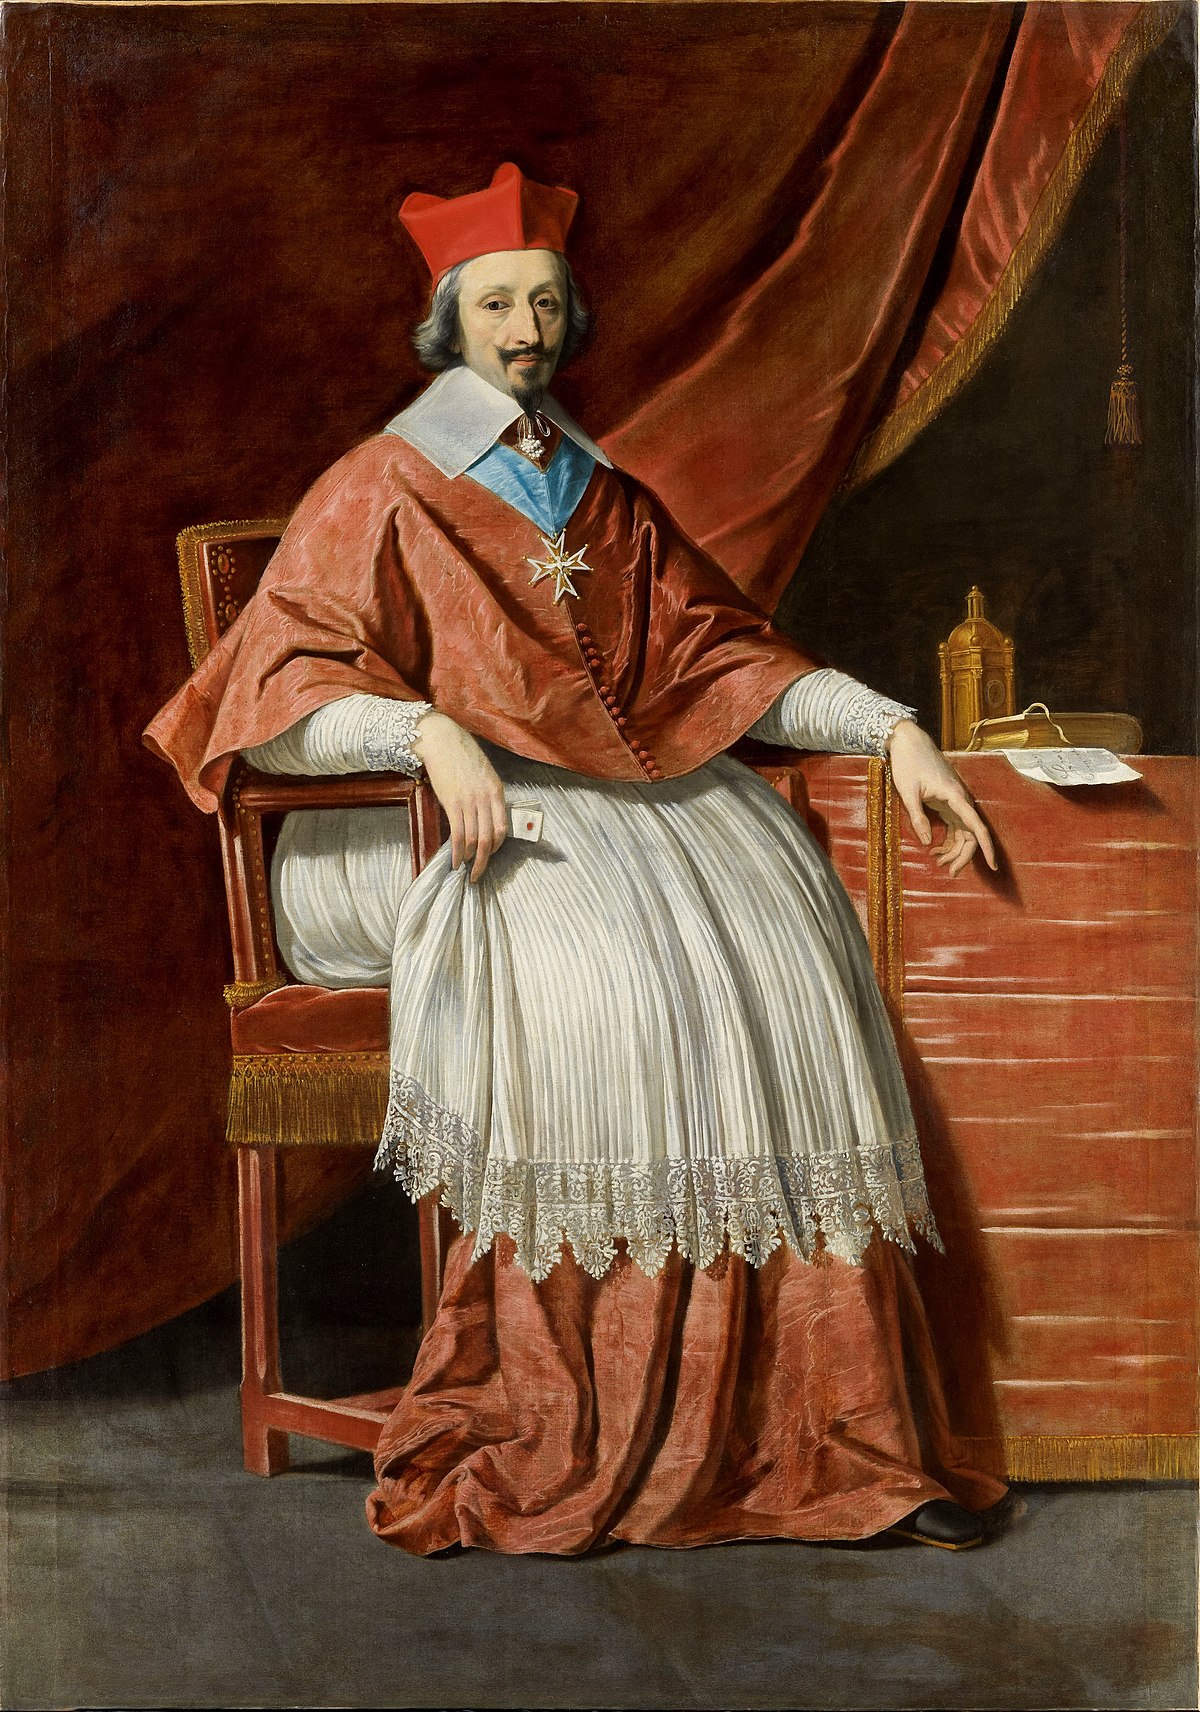 Cardenal Richelieu - Wikipedia, la enciclopedia libre